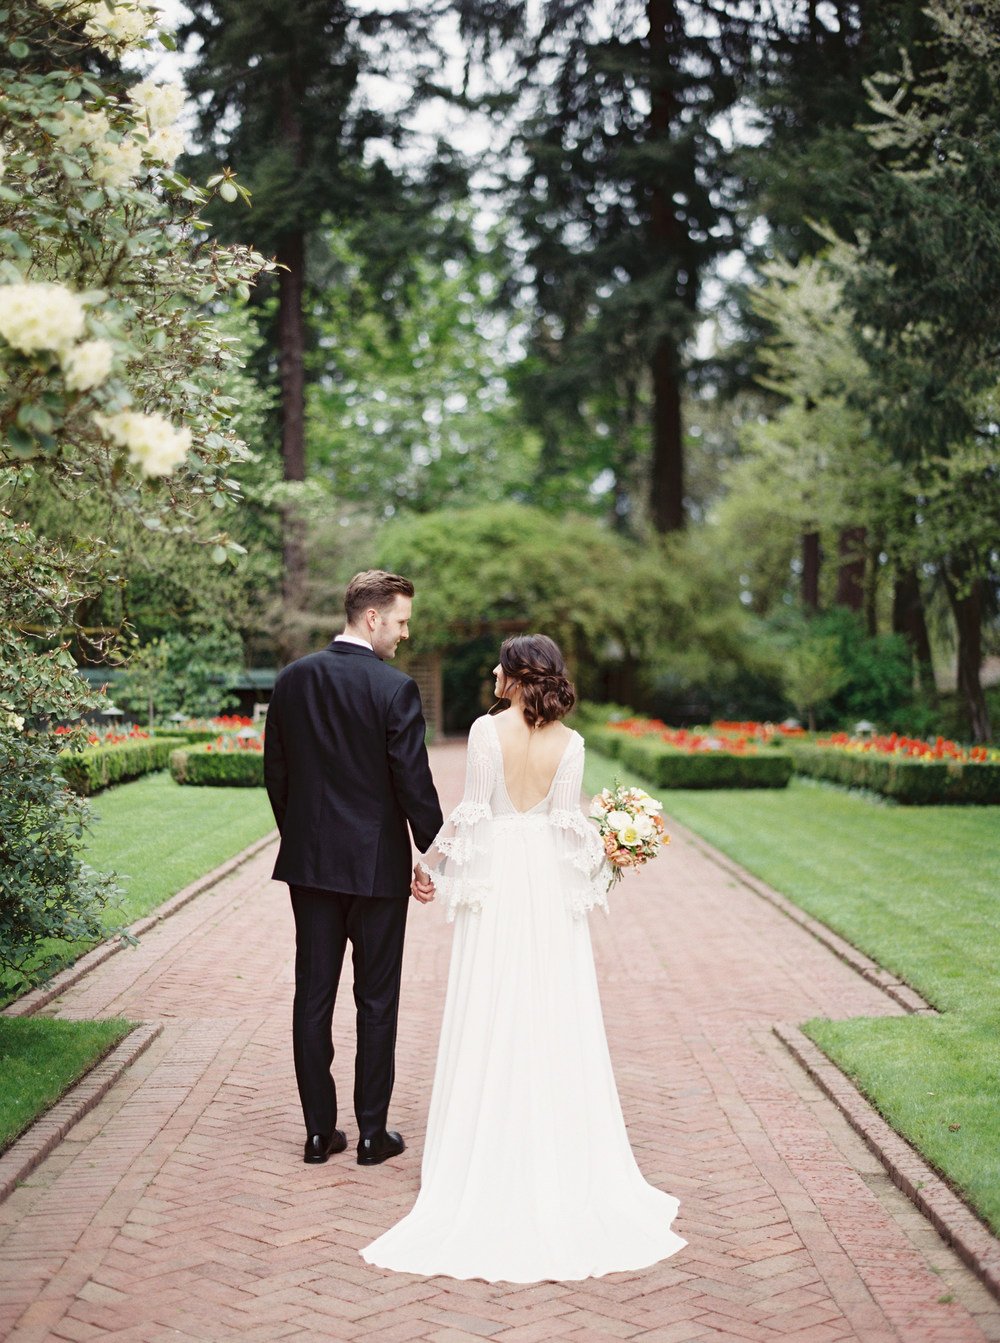 Old-Fashioned English Rose Garden Wedding Inspiration ⋆ Ruffled